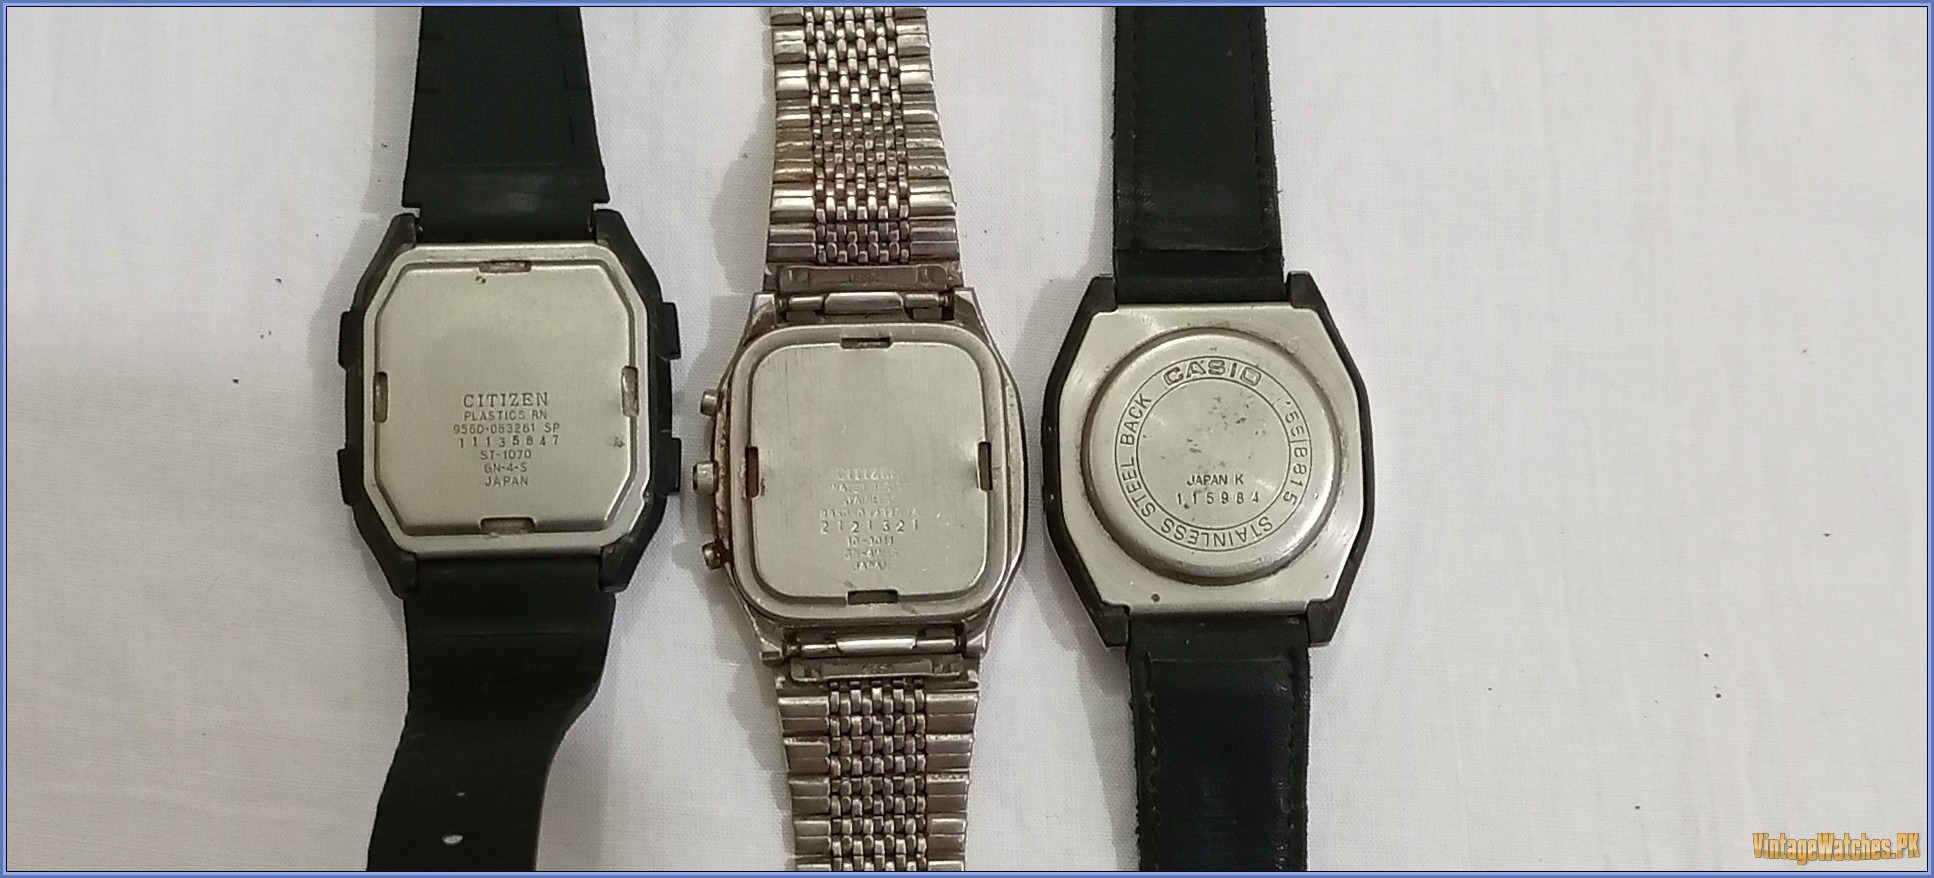 Lot 6 Original Vintage Old Classic Ana Digital Watches Casio Citizen 9570, 9560, 8950 - PK00017-IMG_20221009_191444_159 - VintageWatches.PK